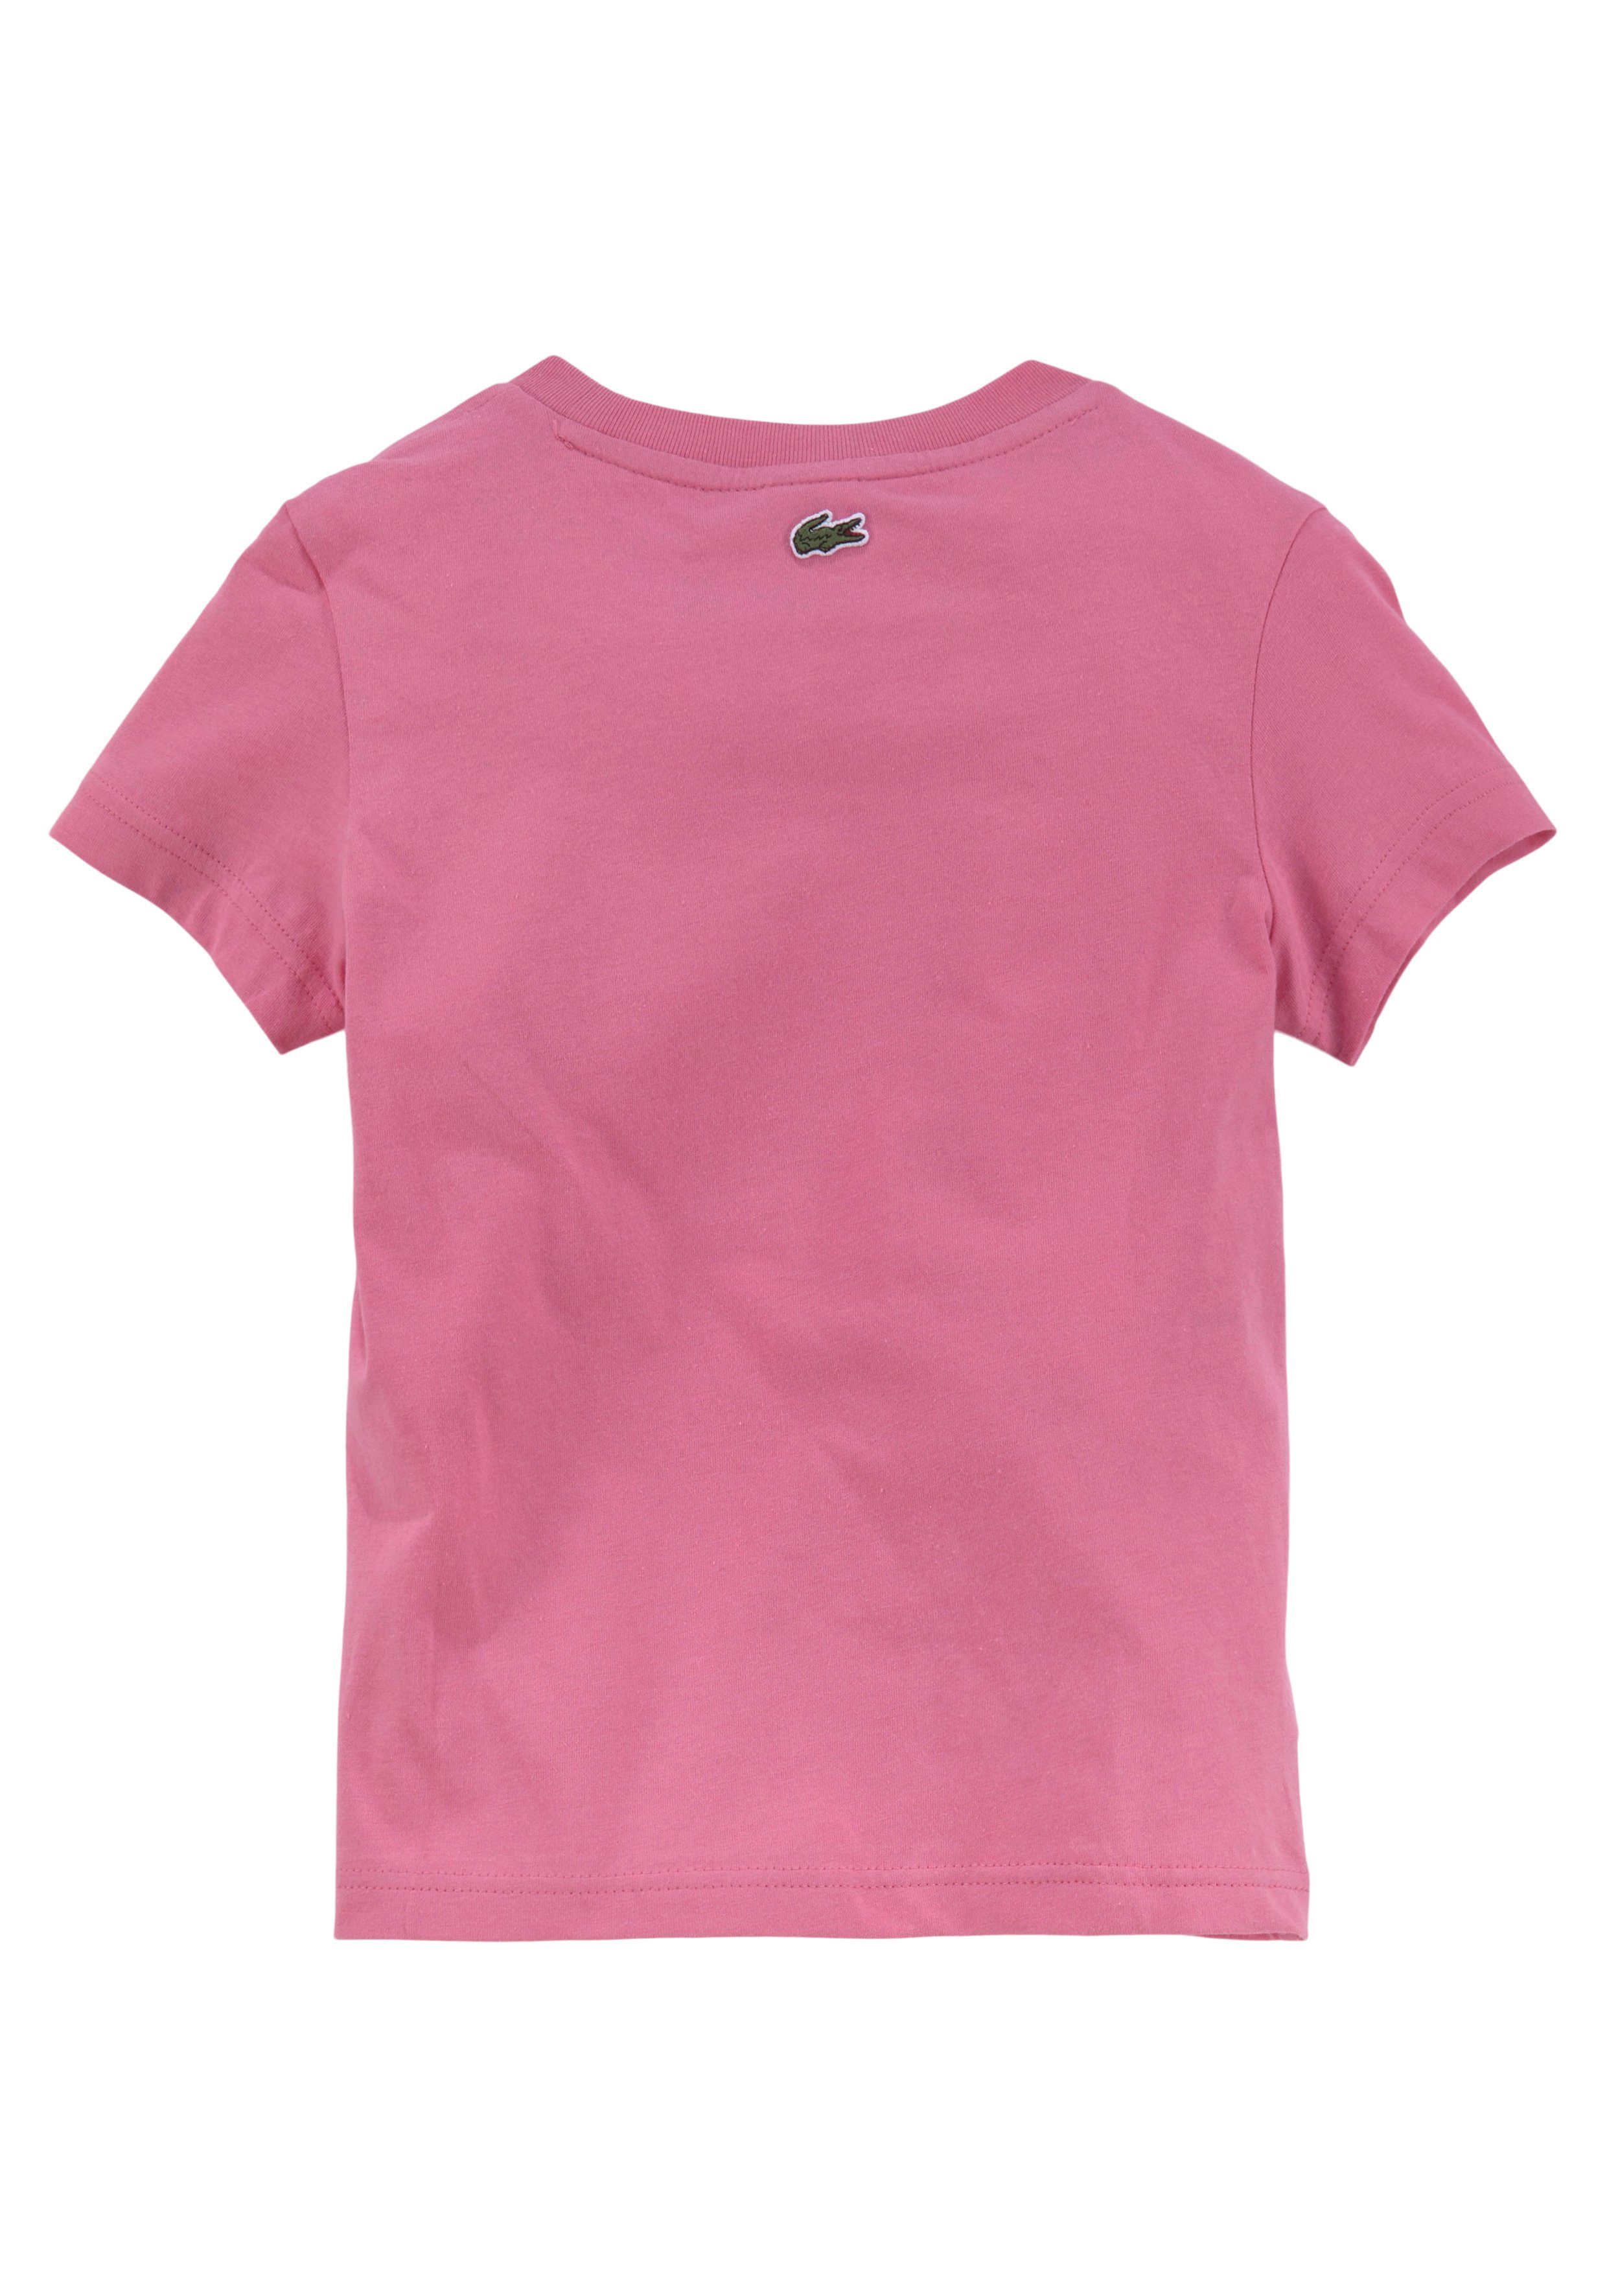 Logodruck Lacoste reseda großem mit pink T-Shirt